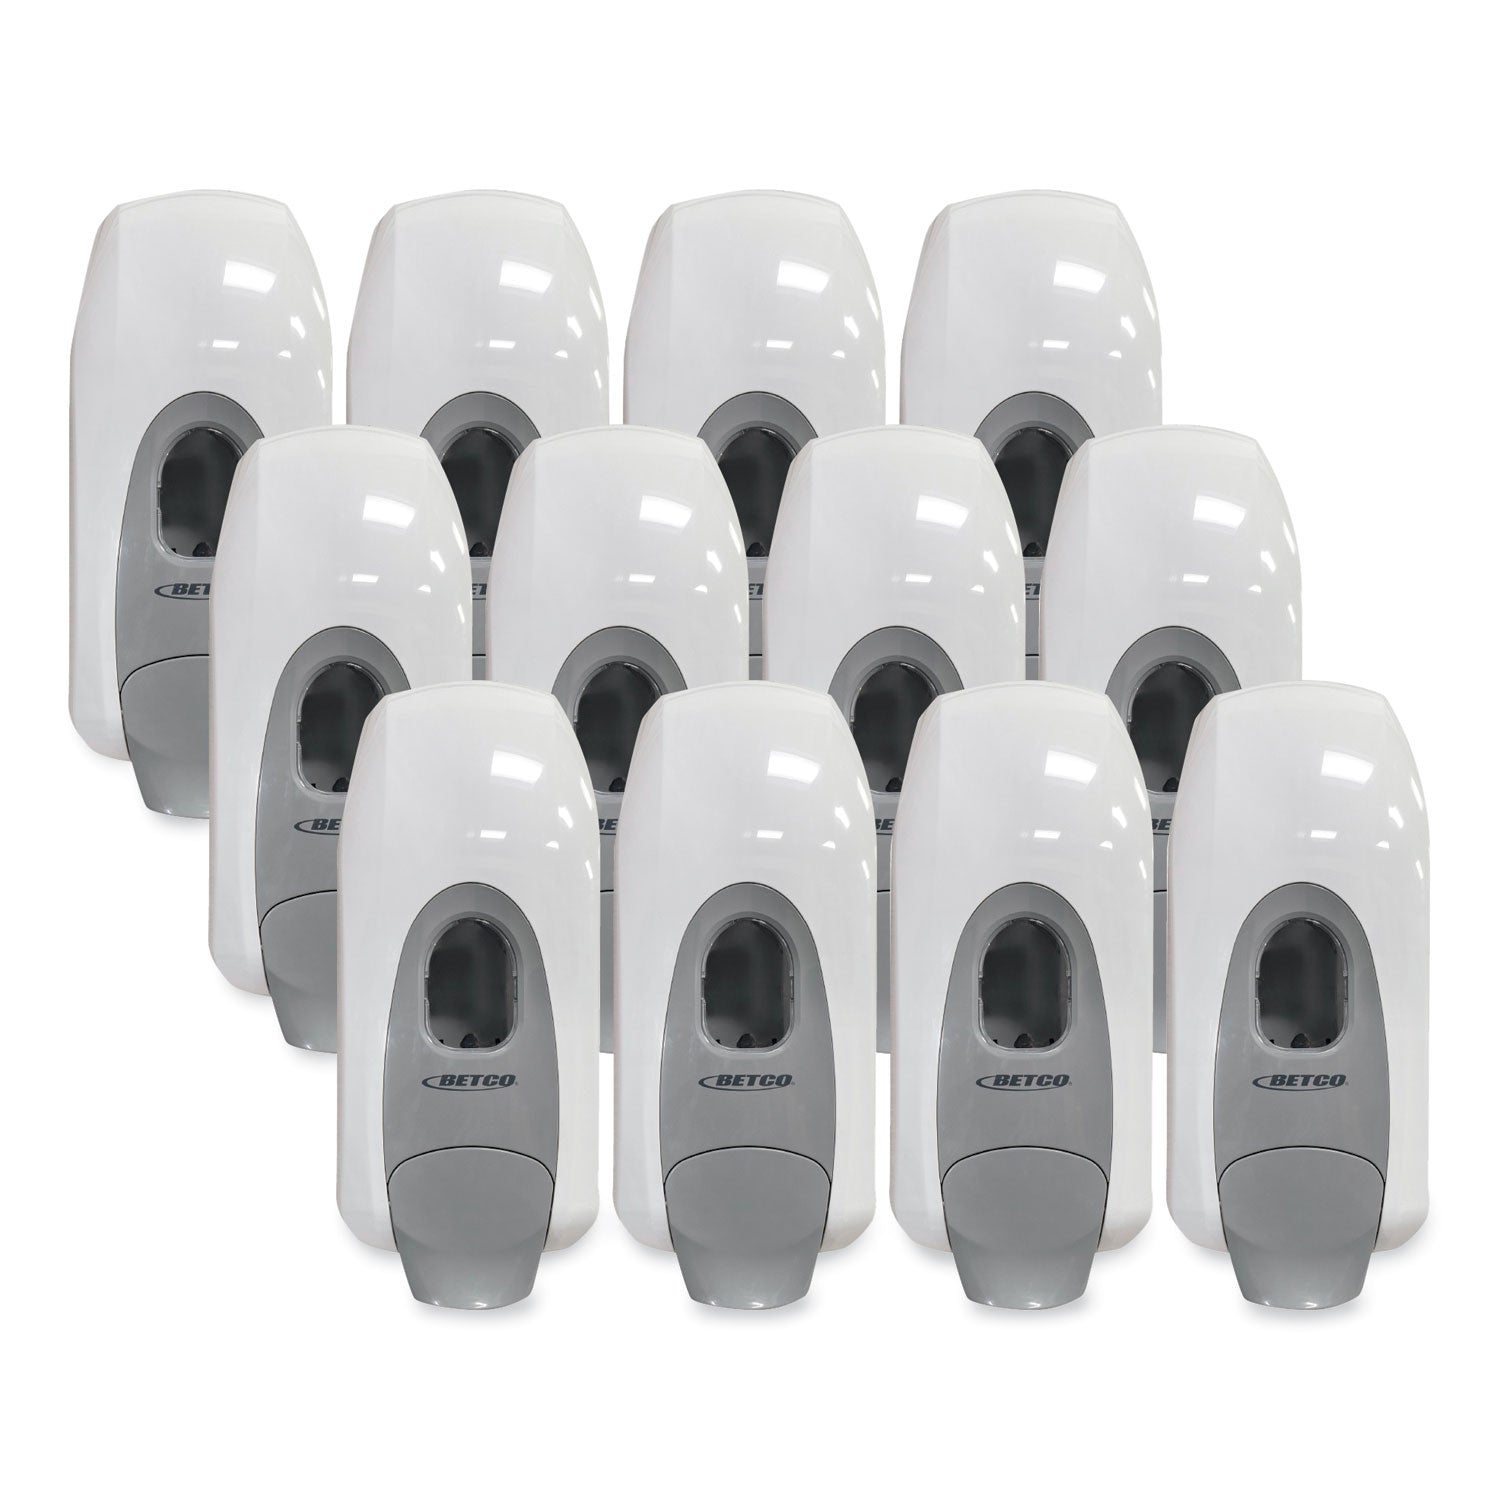 Betco Clario Manual Skin Care Foam Dispenser - Manual - 1.06 quart Capacity - Hygienic, Refillable, Site Window, Durable - White - 12 / Carton - 3